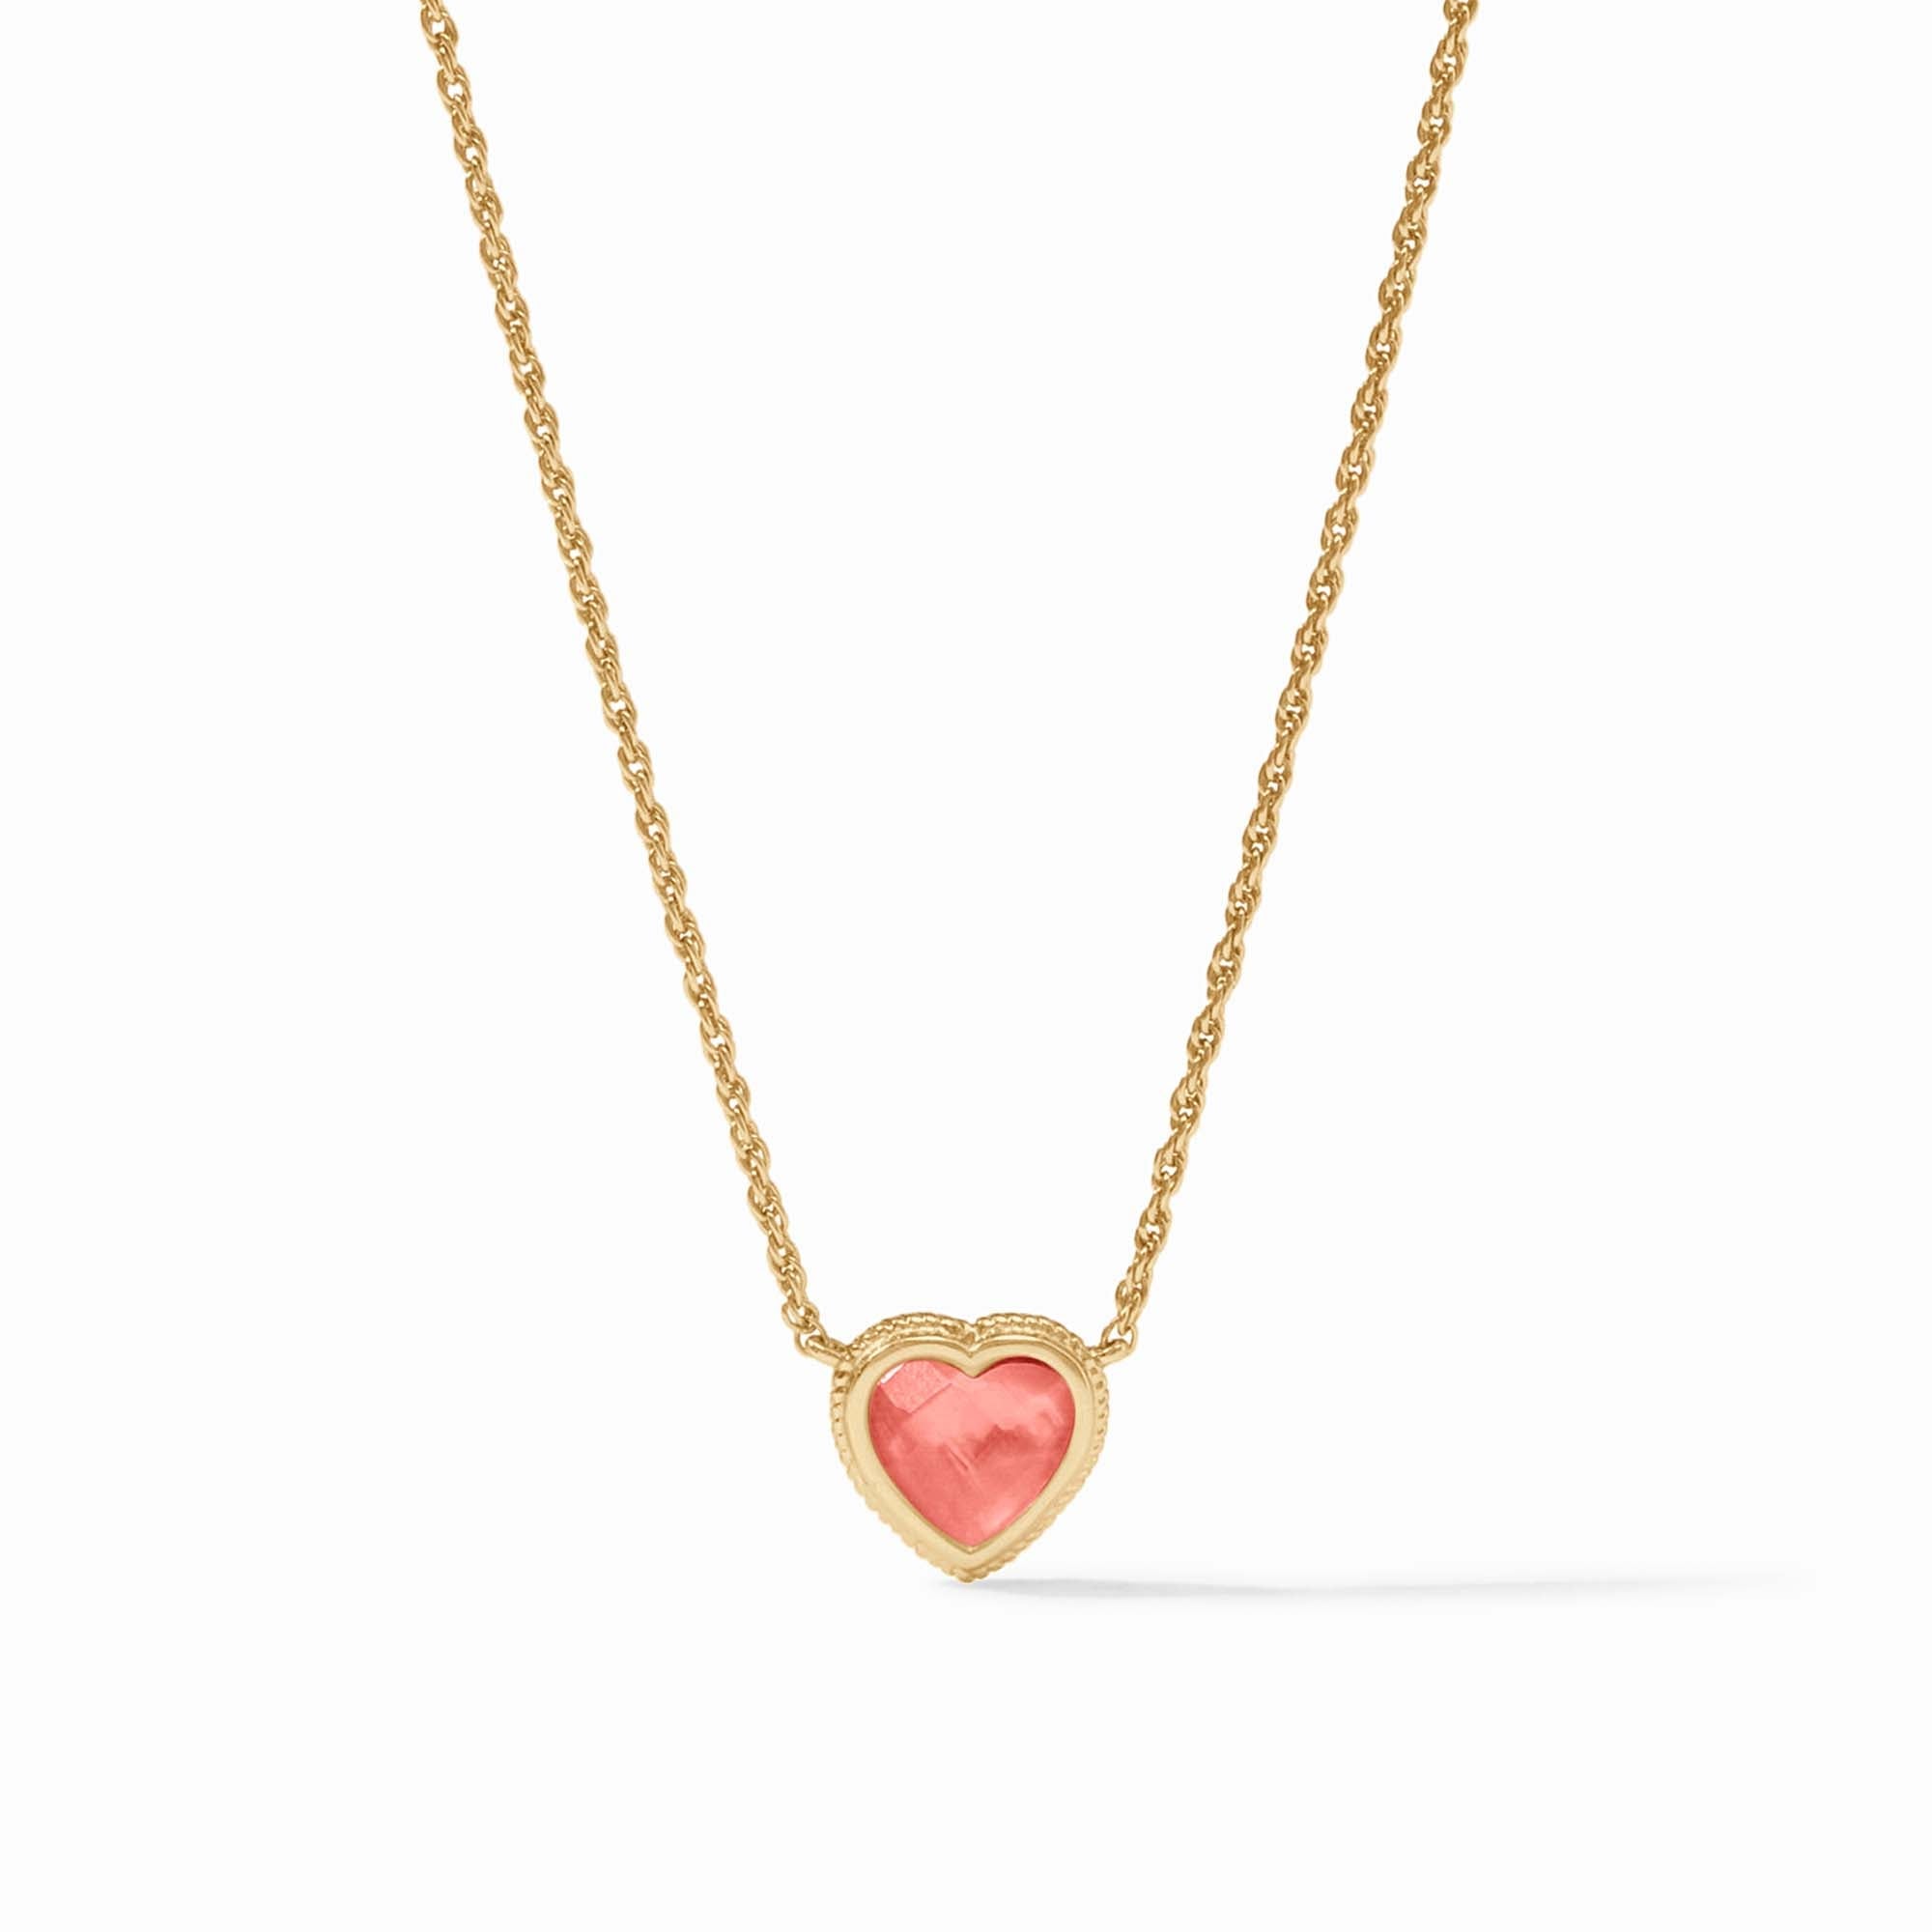 Julie Vos - Heart Delicate Necklace, Iridescent Blush Pink